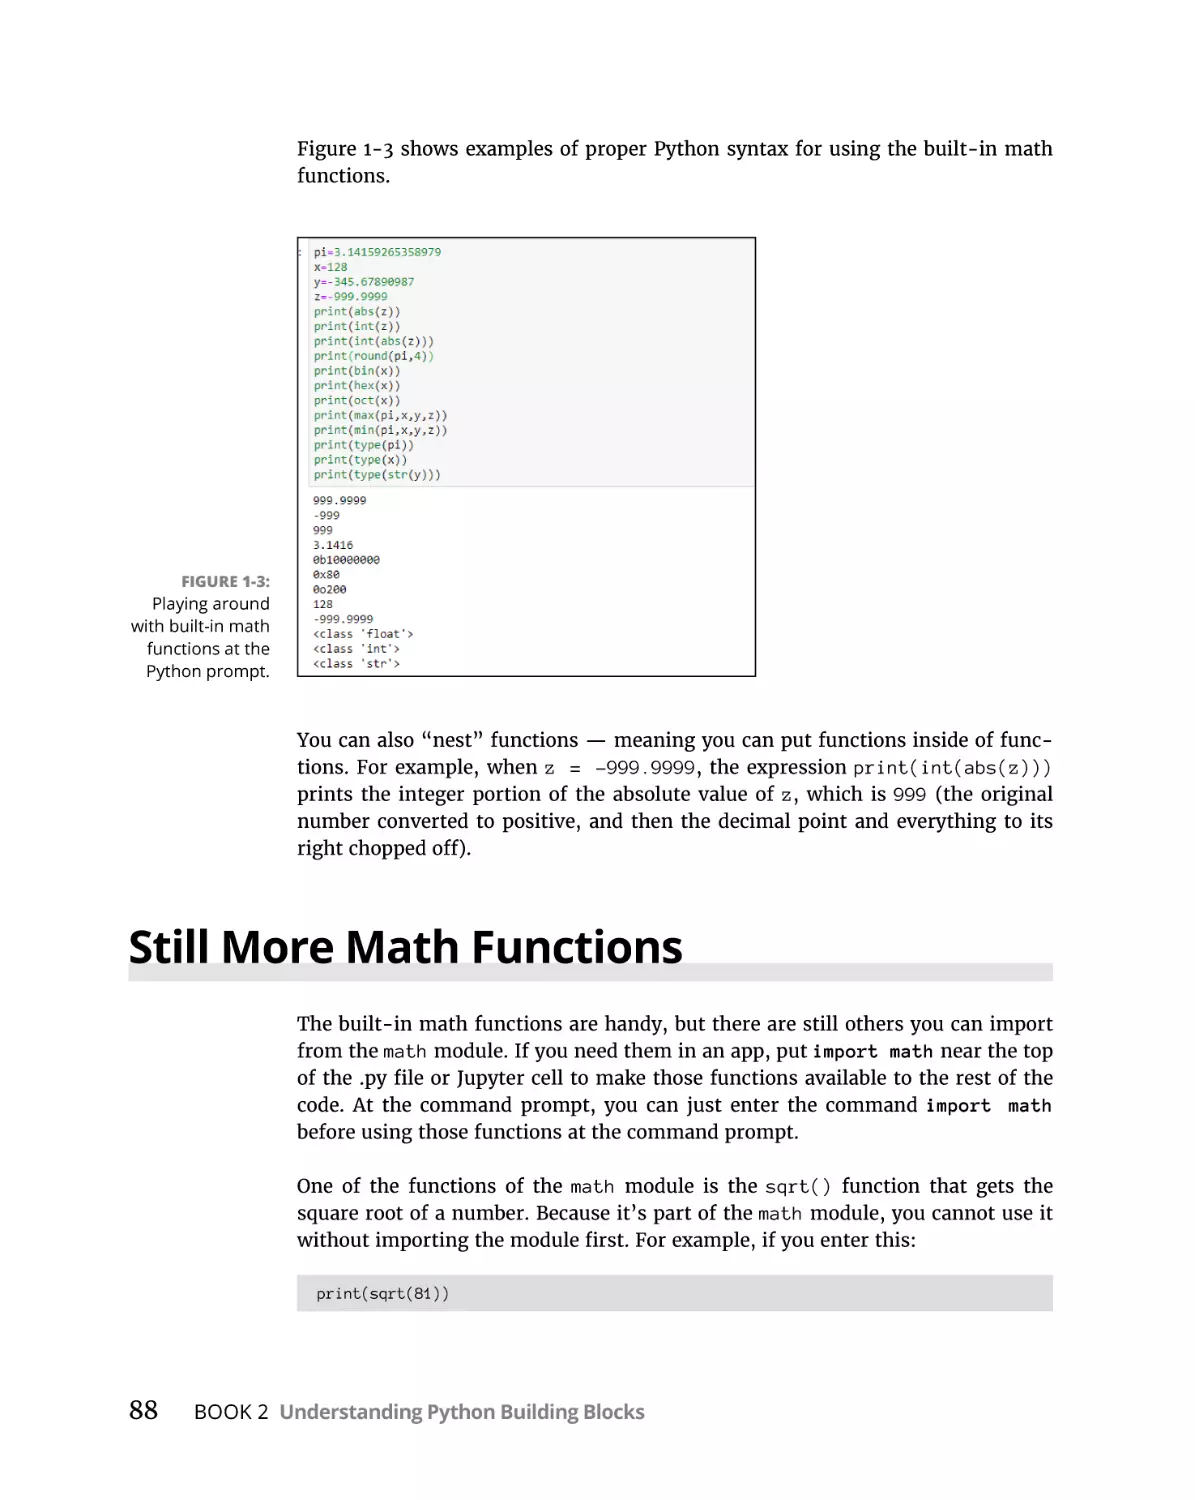 Still More Math Functions